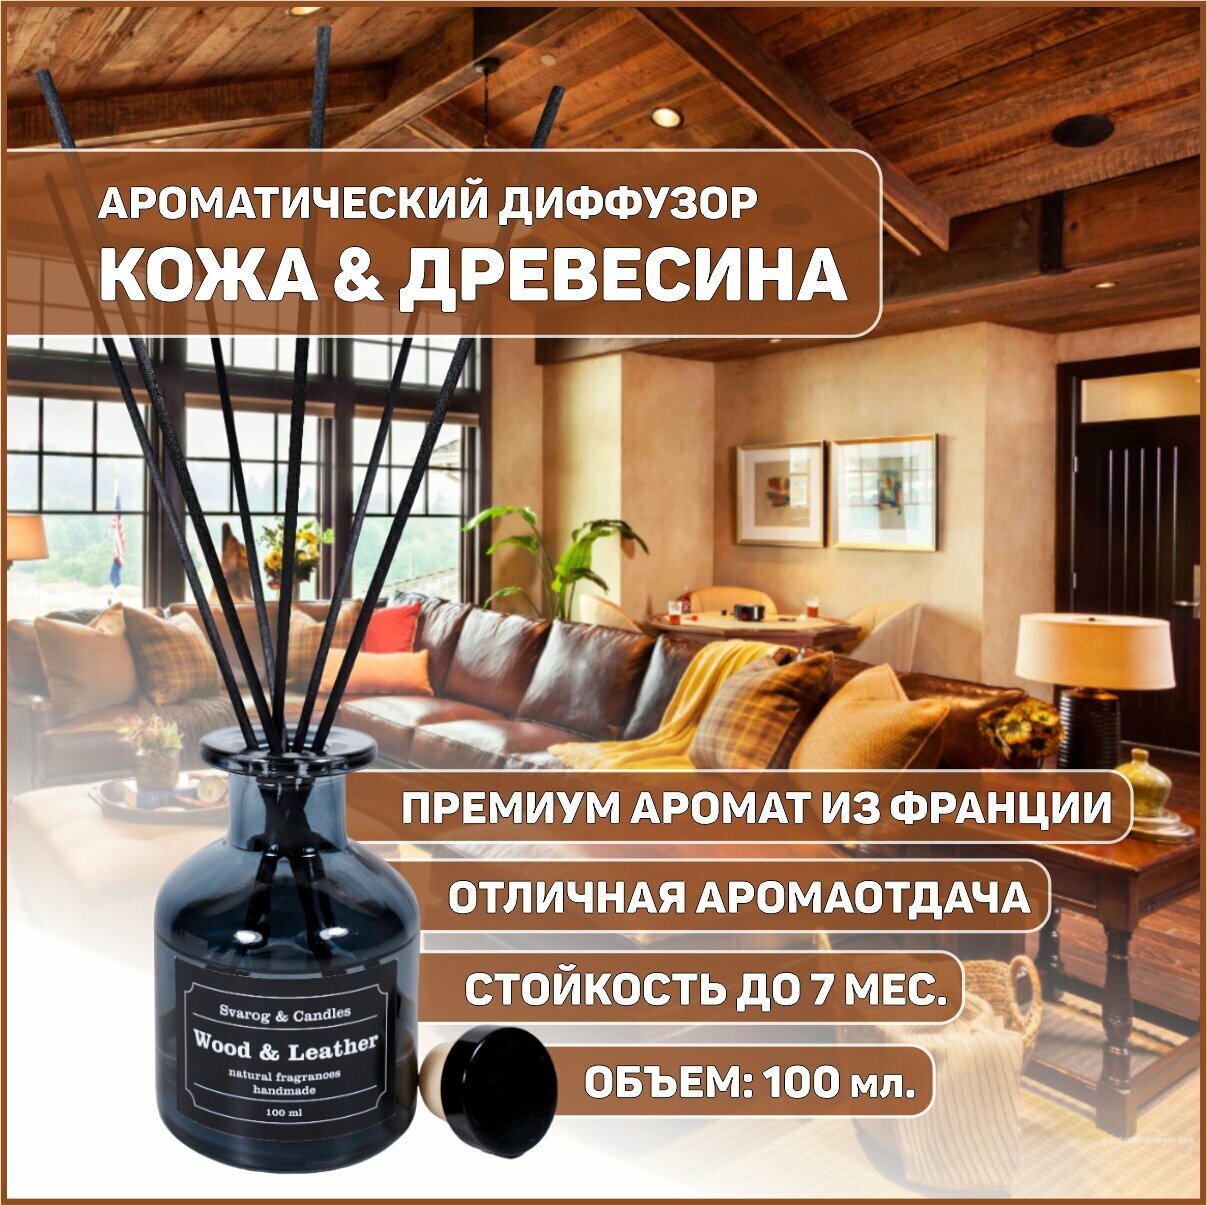 Диффузор ароматический ароматизатор для дома LEATHER & WOOD (Кожа и Древесина), 100 мл.